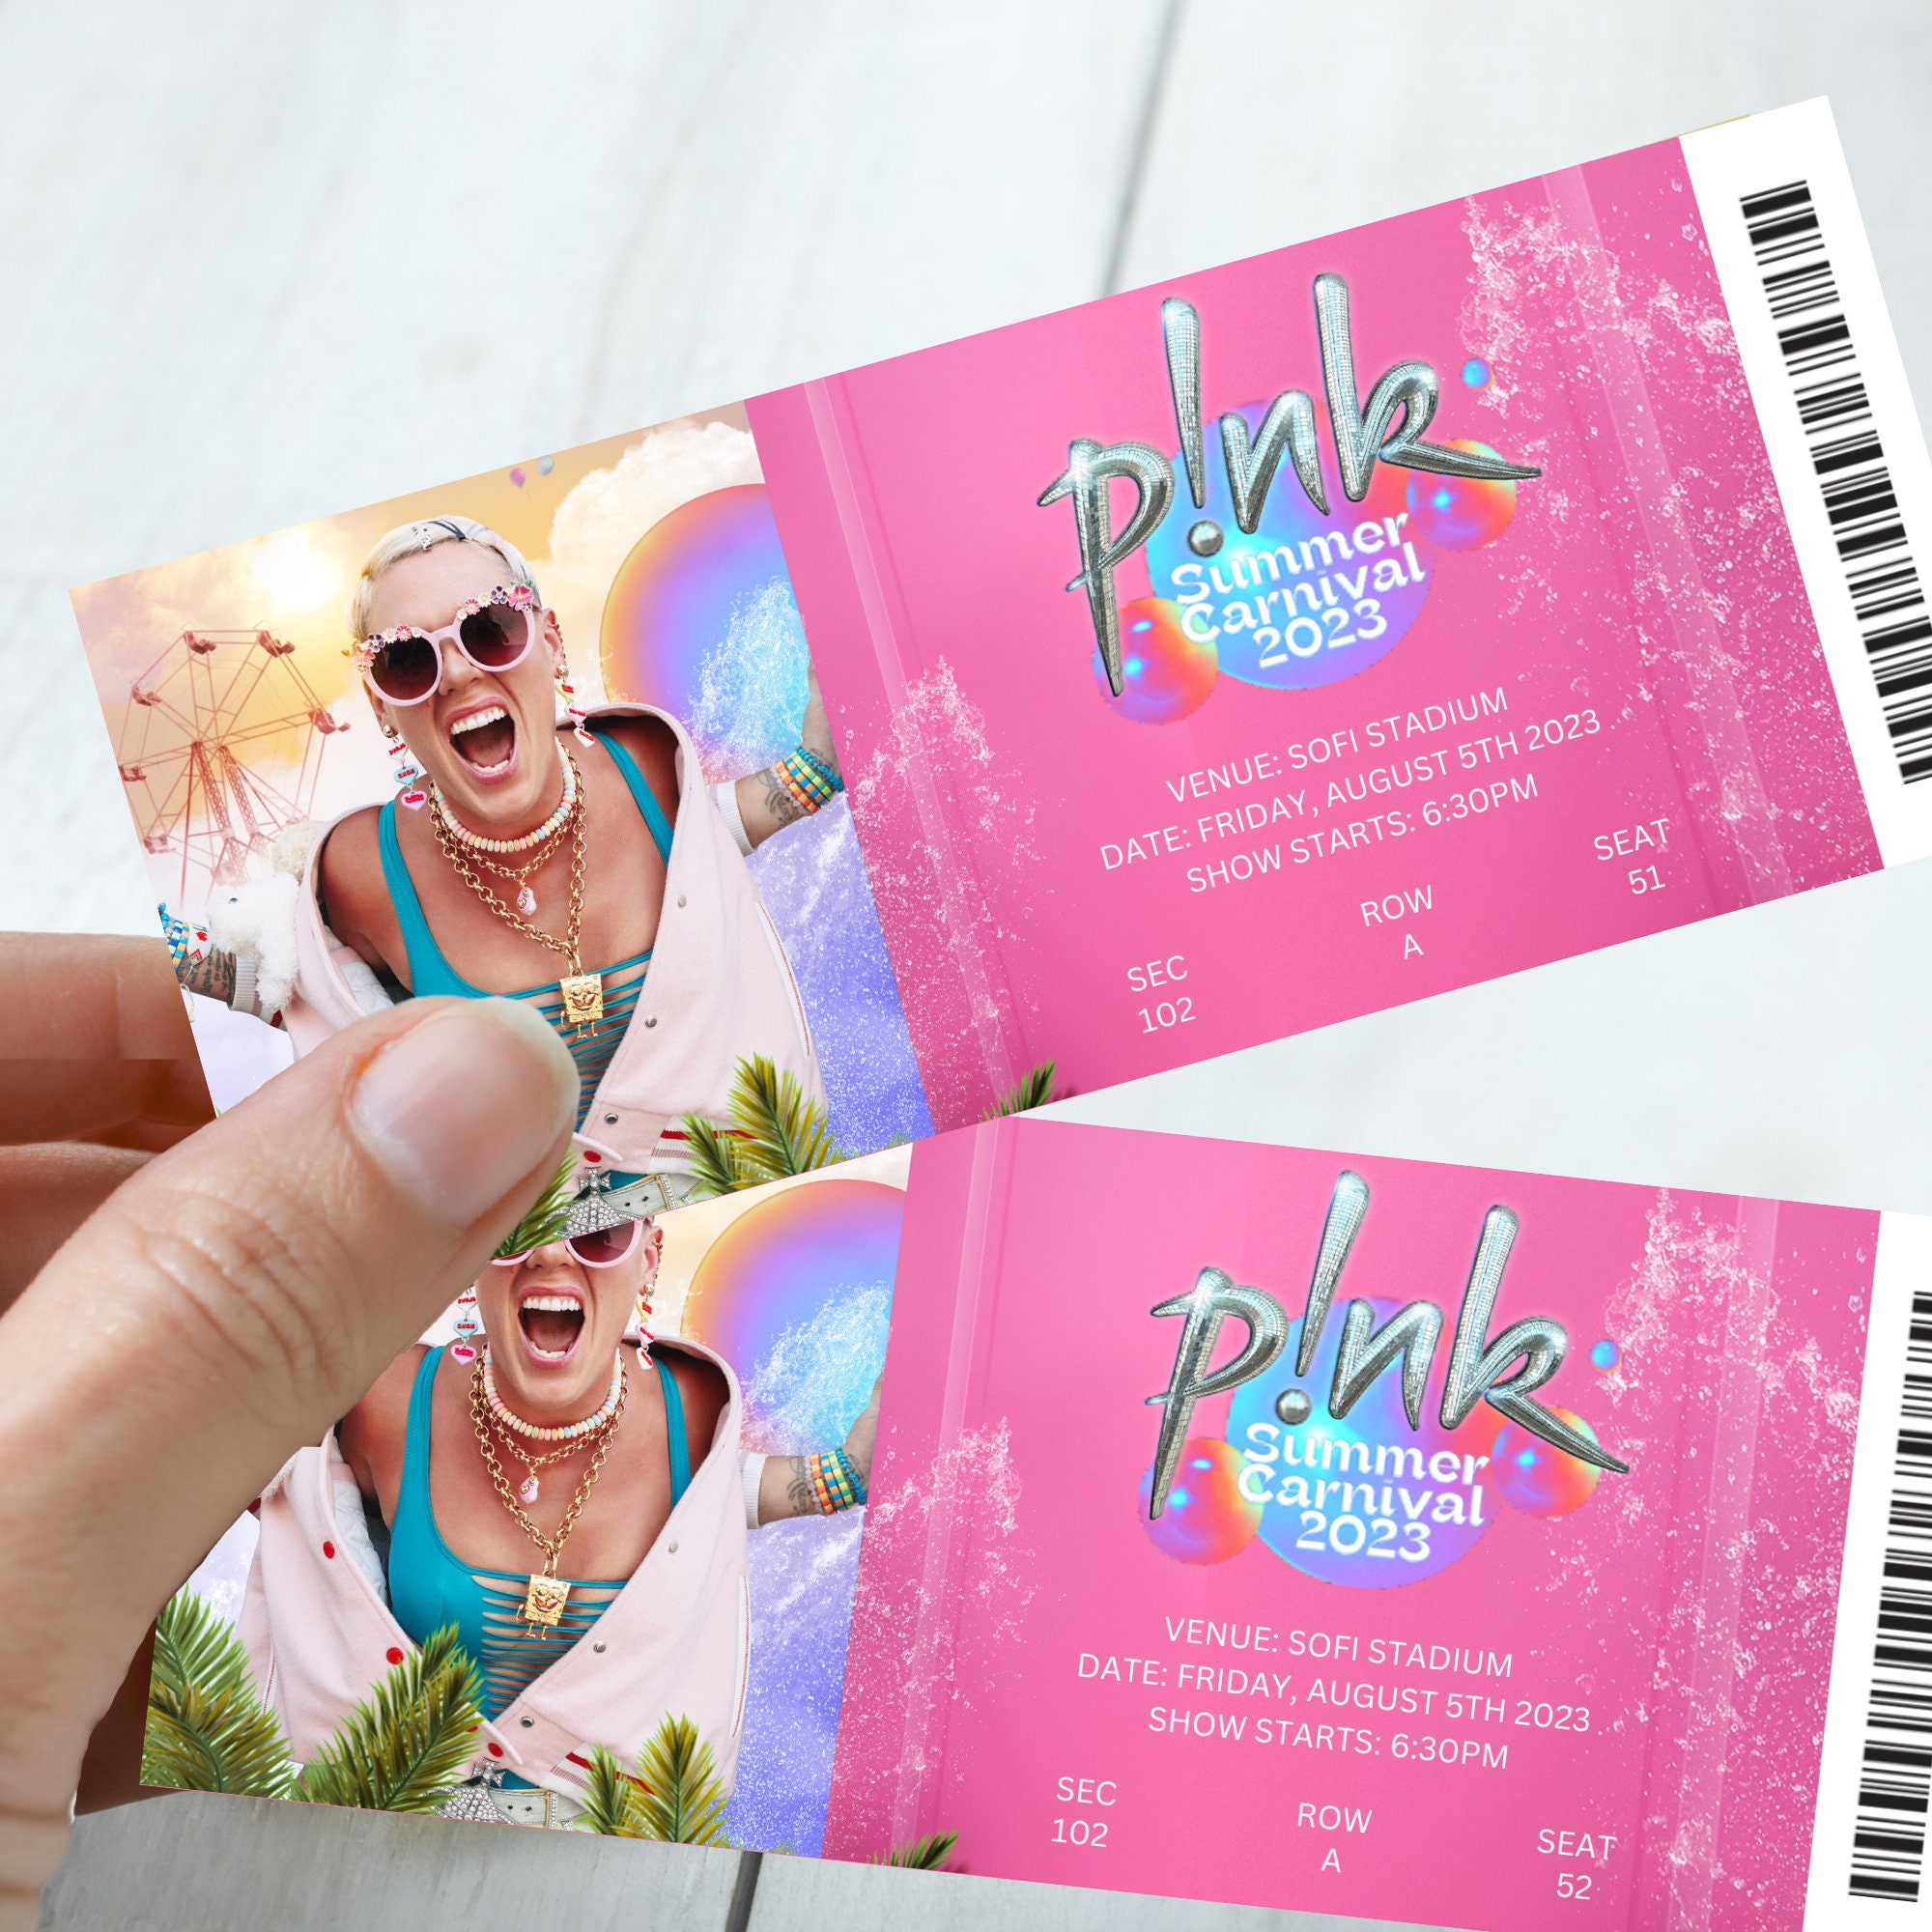 Surprise Pink Concert Tickets. Summer Carnival Tour 2023 Etsy Australia